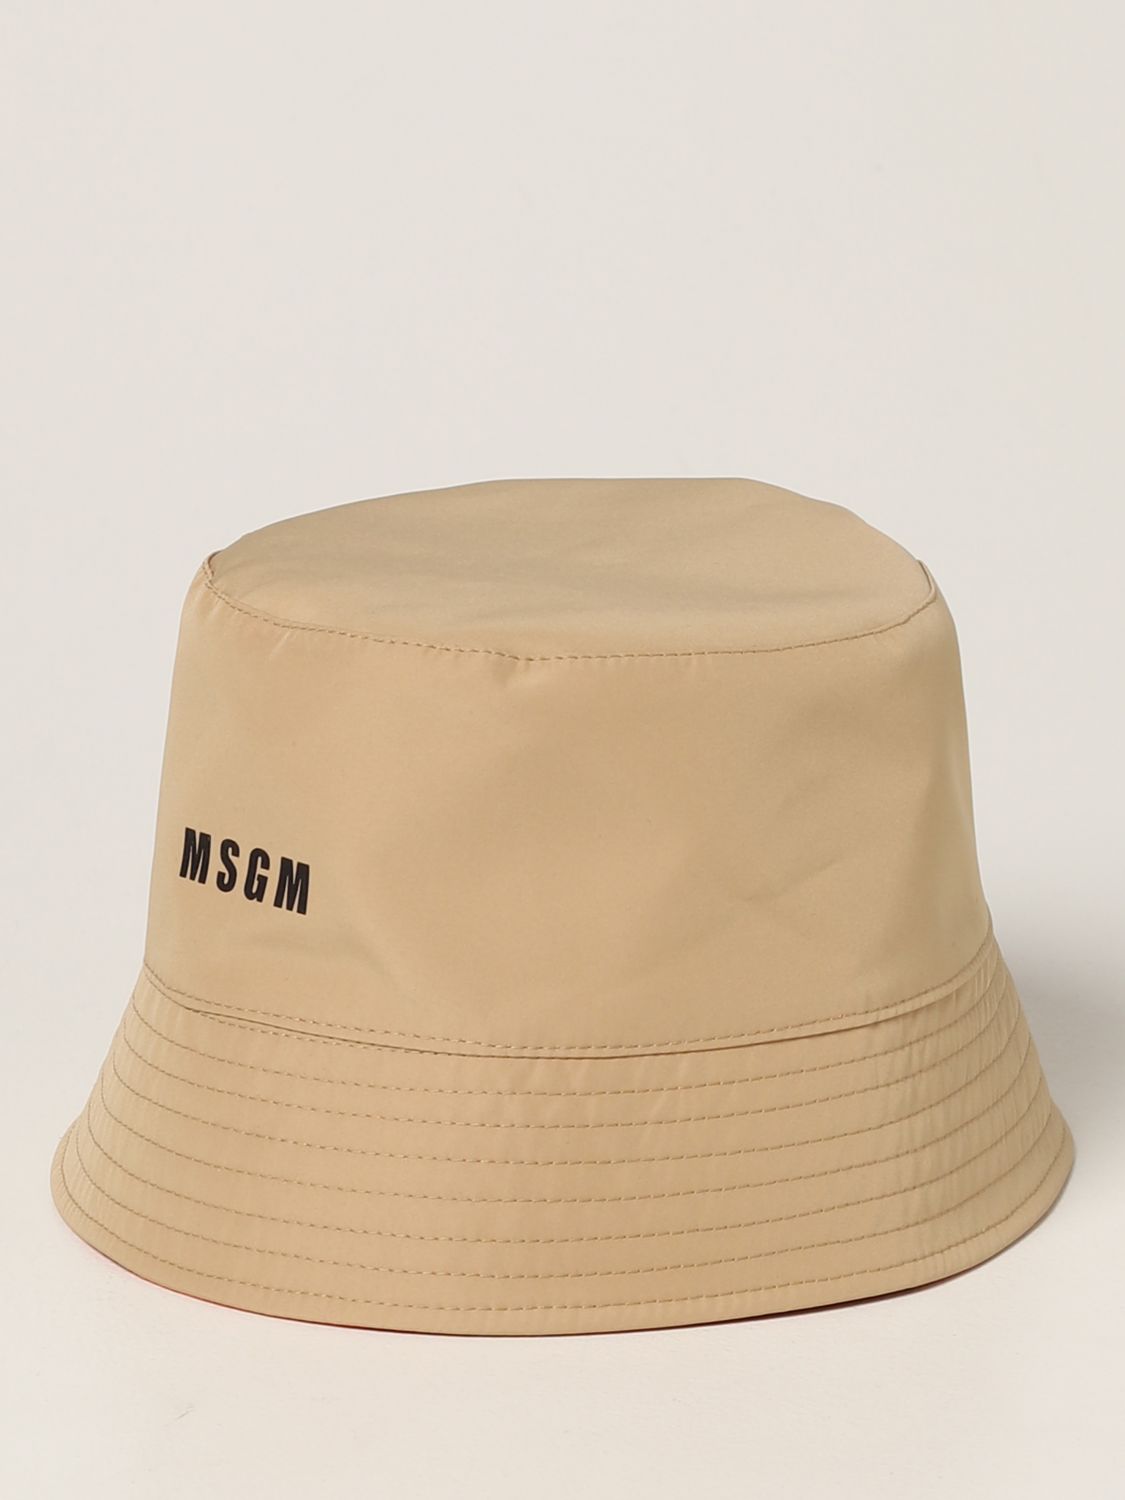 Msgm fisherman hat